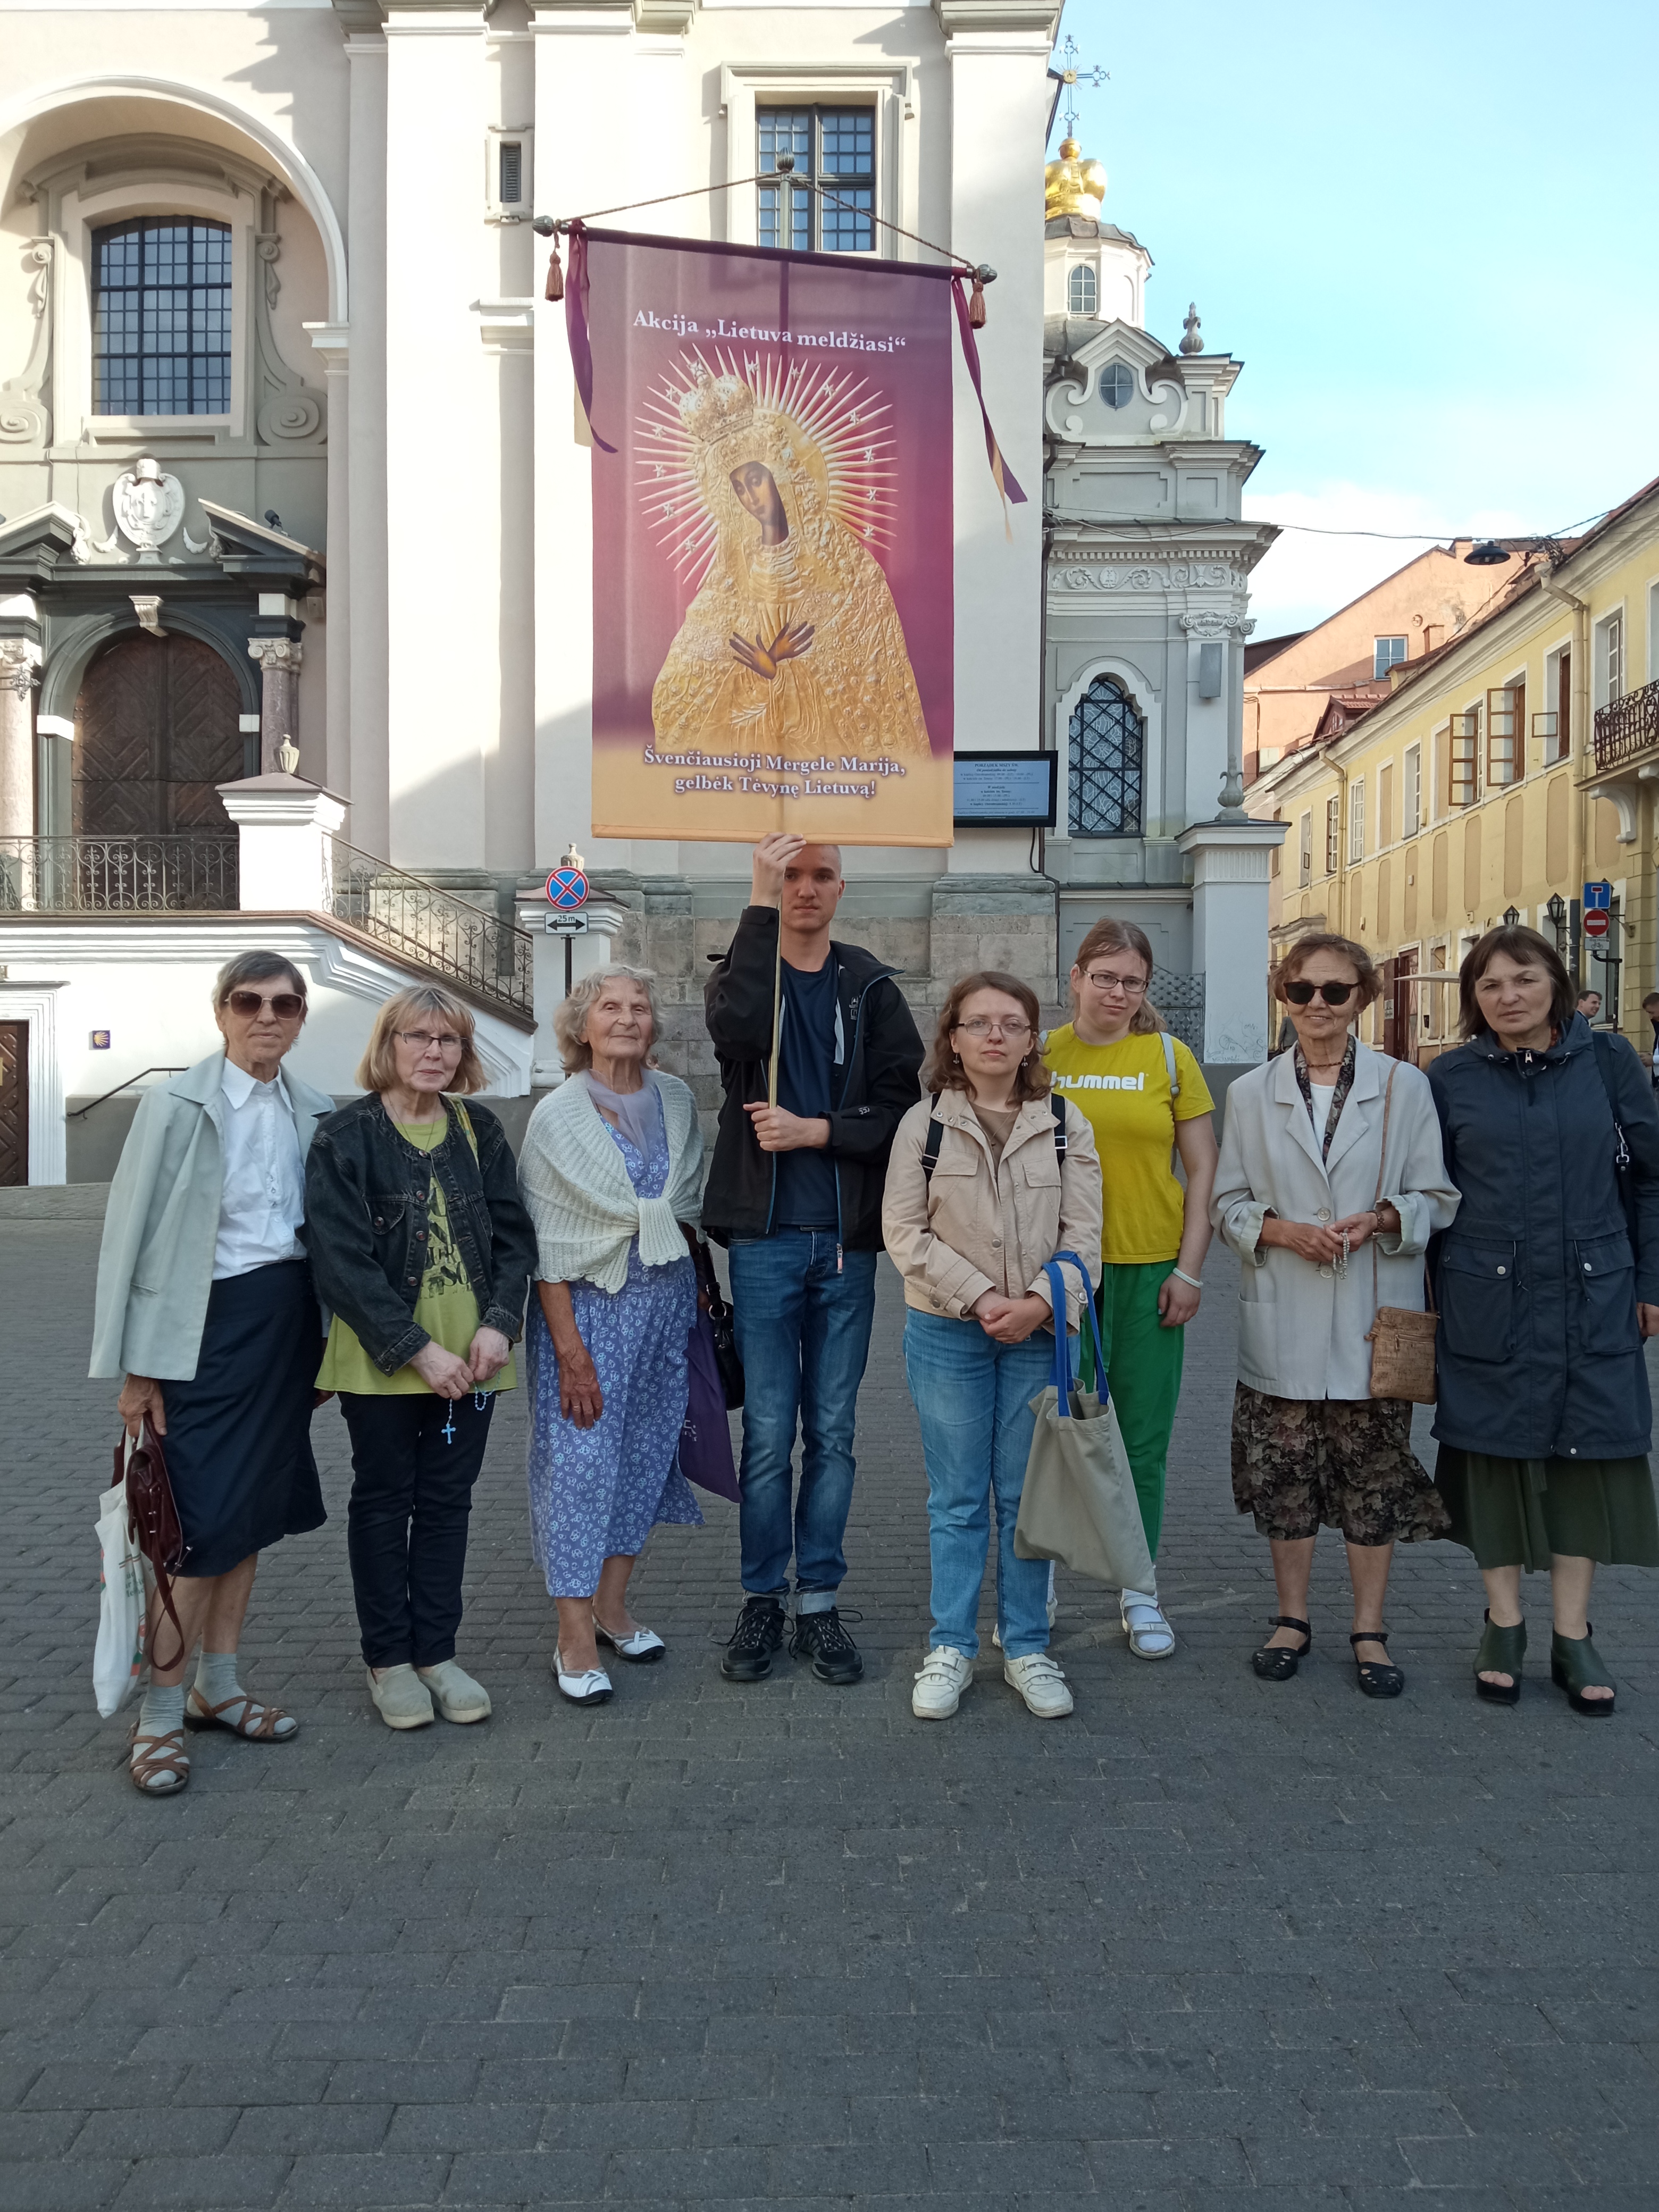 Liepos 3d. Vilniuje meldėsi 8 maldininkai.
